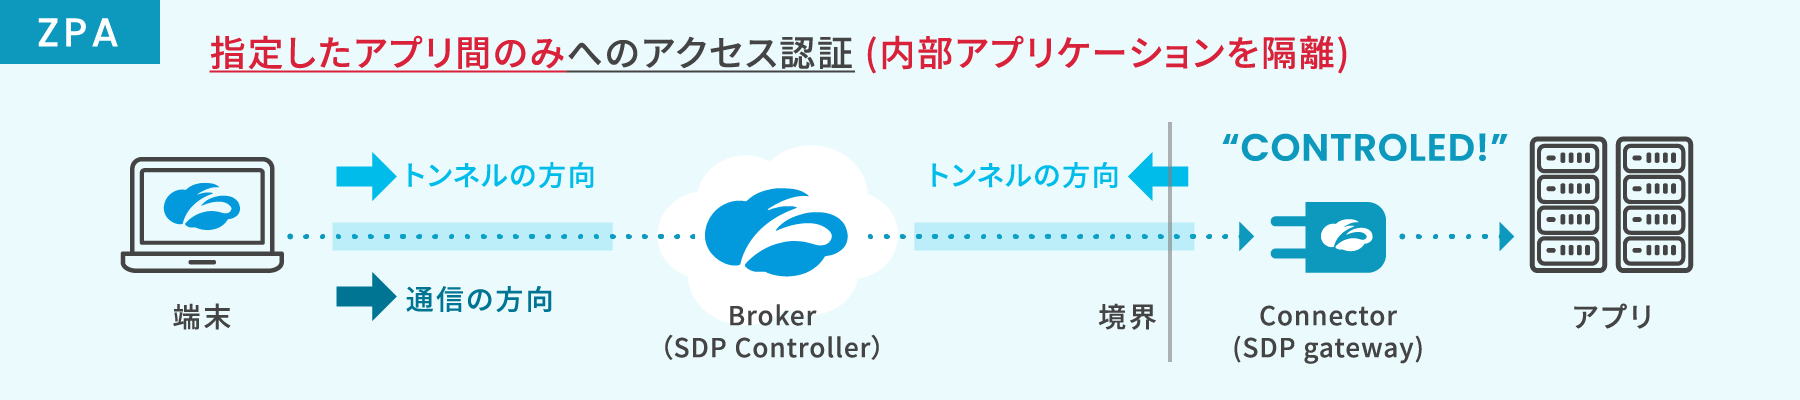 ZPAは、外側の端末と内部アプリケーション側のConnecter(SDP Gateway)からBroker(SDP Controller)で承認をした後、アクセス側は指定したアプリのみへのアクセス認証をするため、内部アプリケーションを隔離して接続が可能となる。